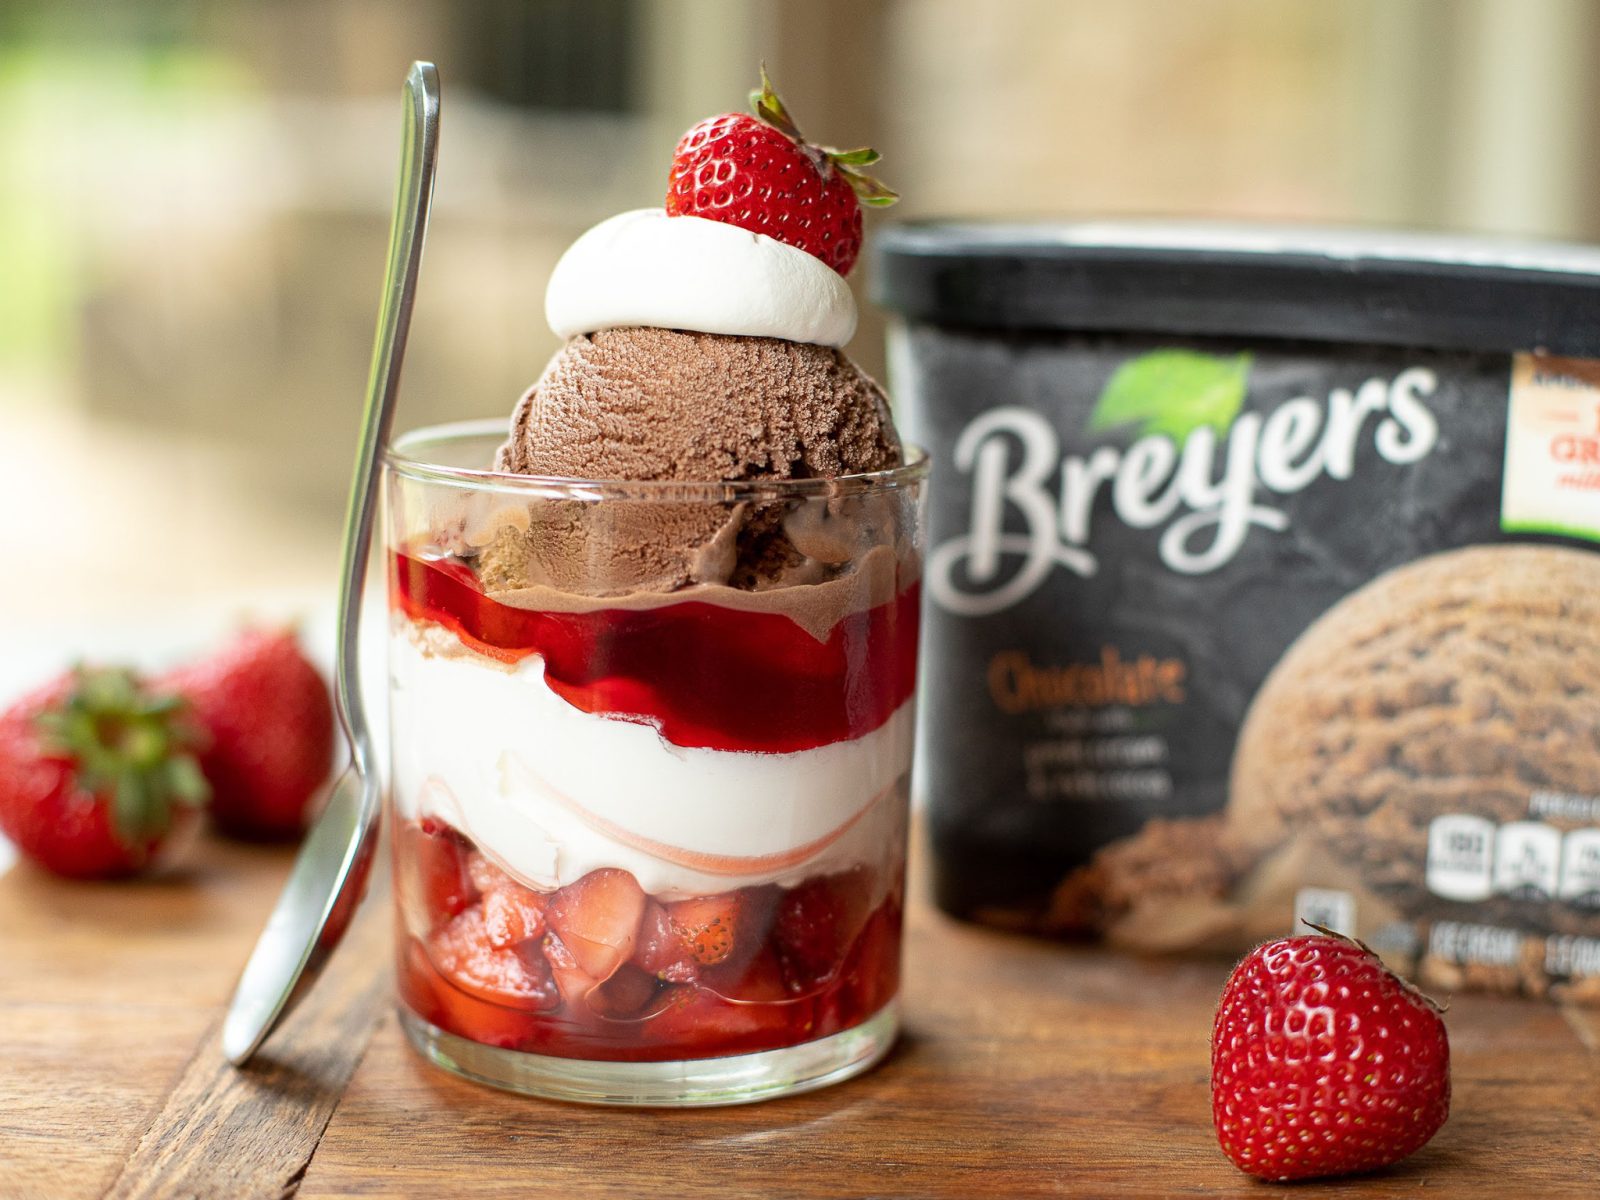 Grab Some Breyers Ice Cream For My Chocolate Covered Strawberry Ice Cream Parfaits